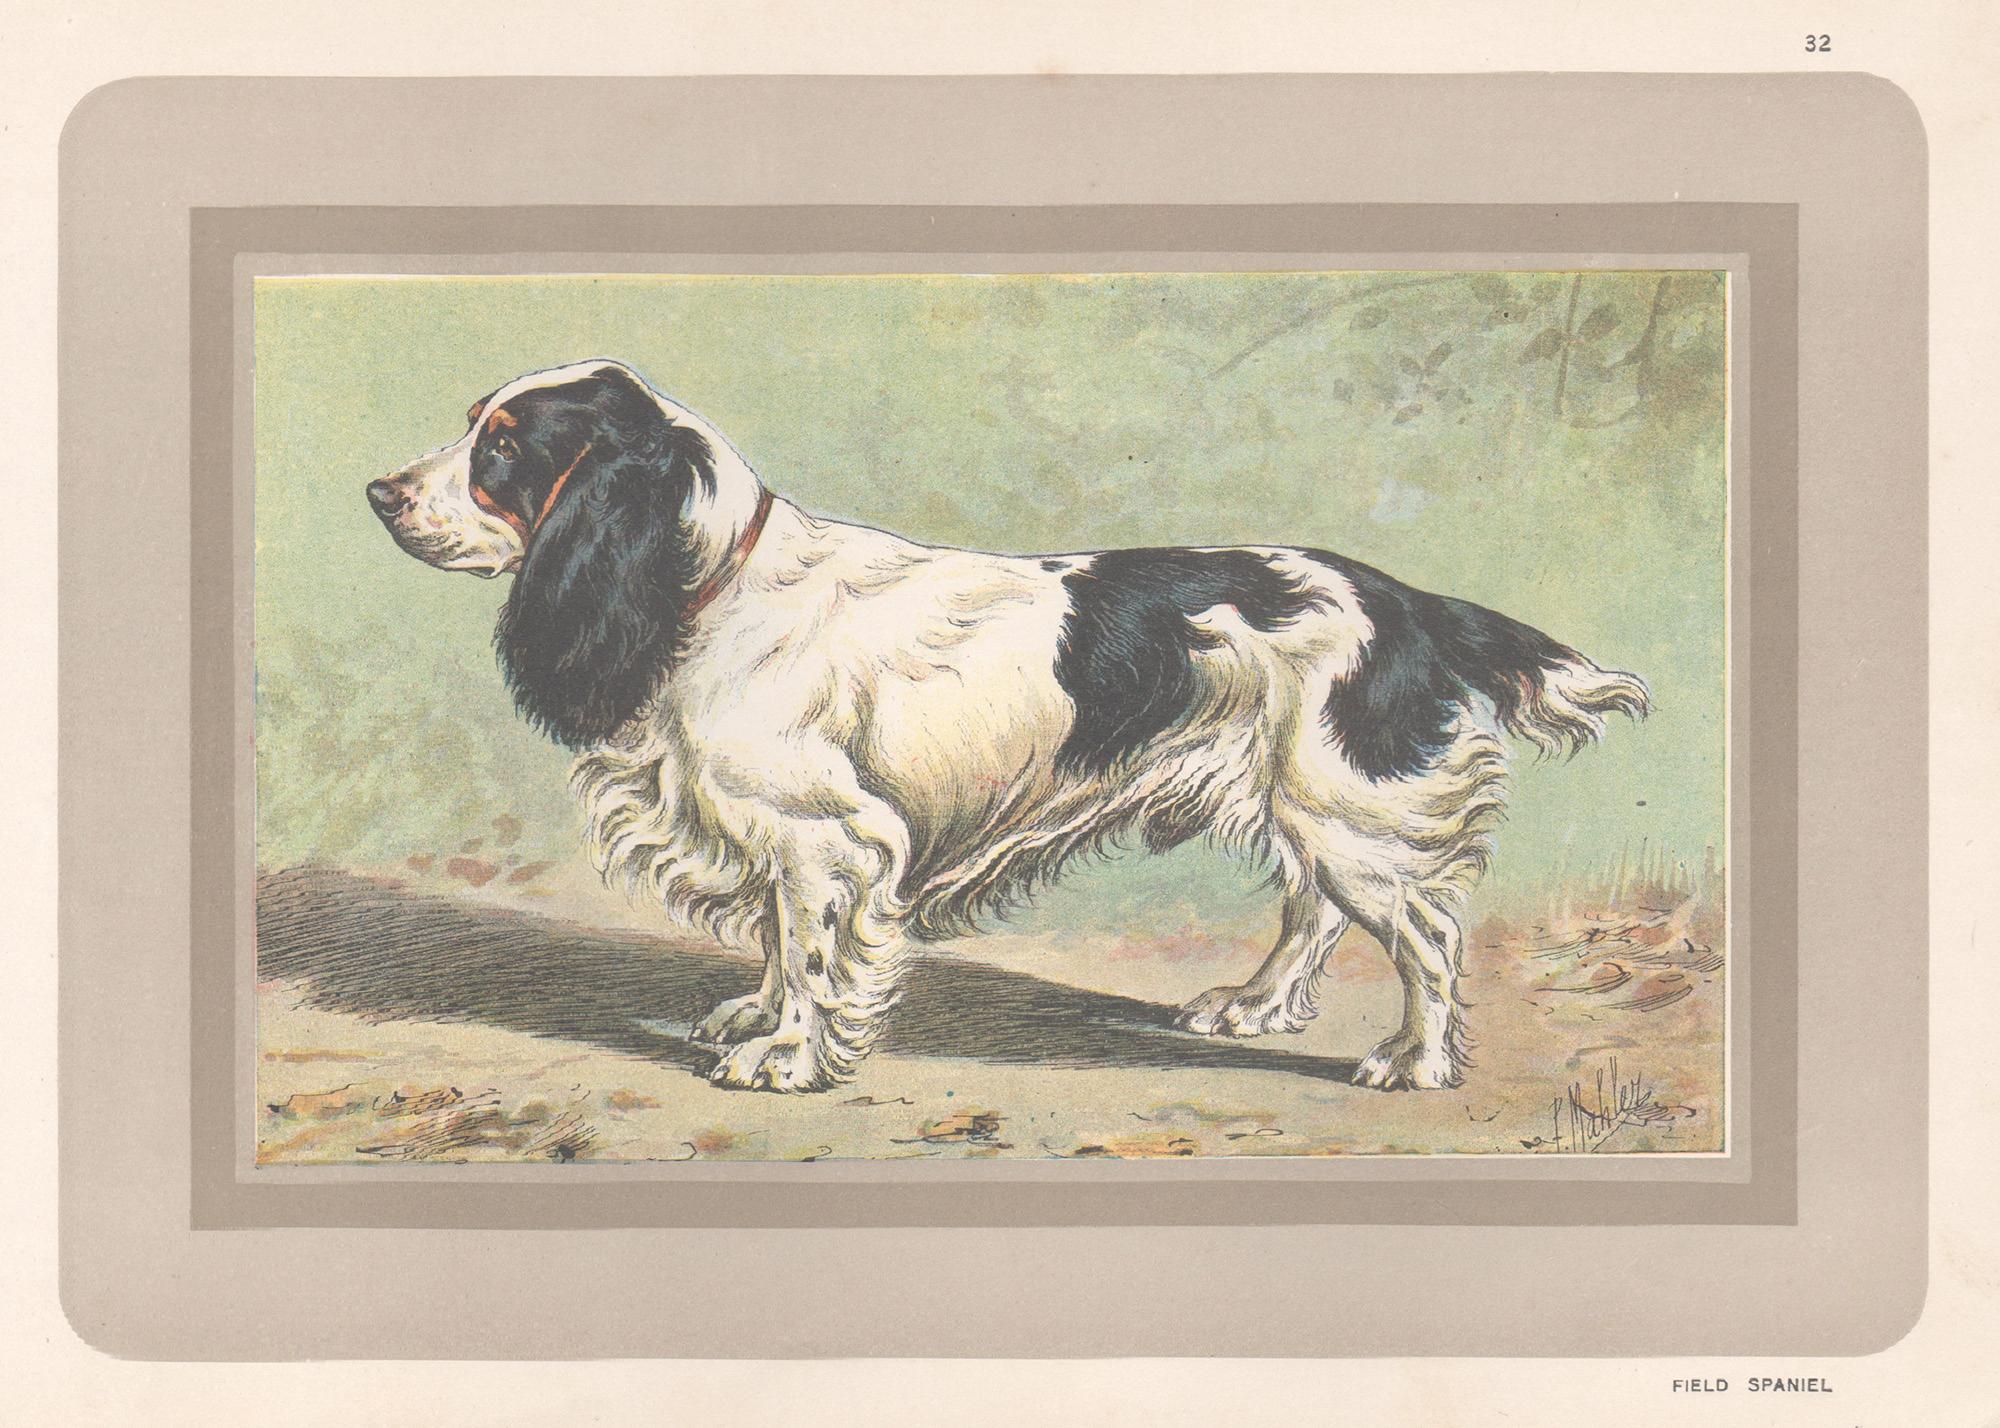 P. Mahler Animal Print - Field Spaniel, French hound dog chromolithograph print, 1930s